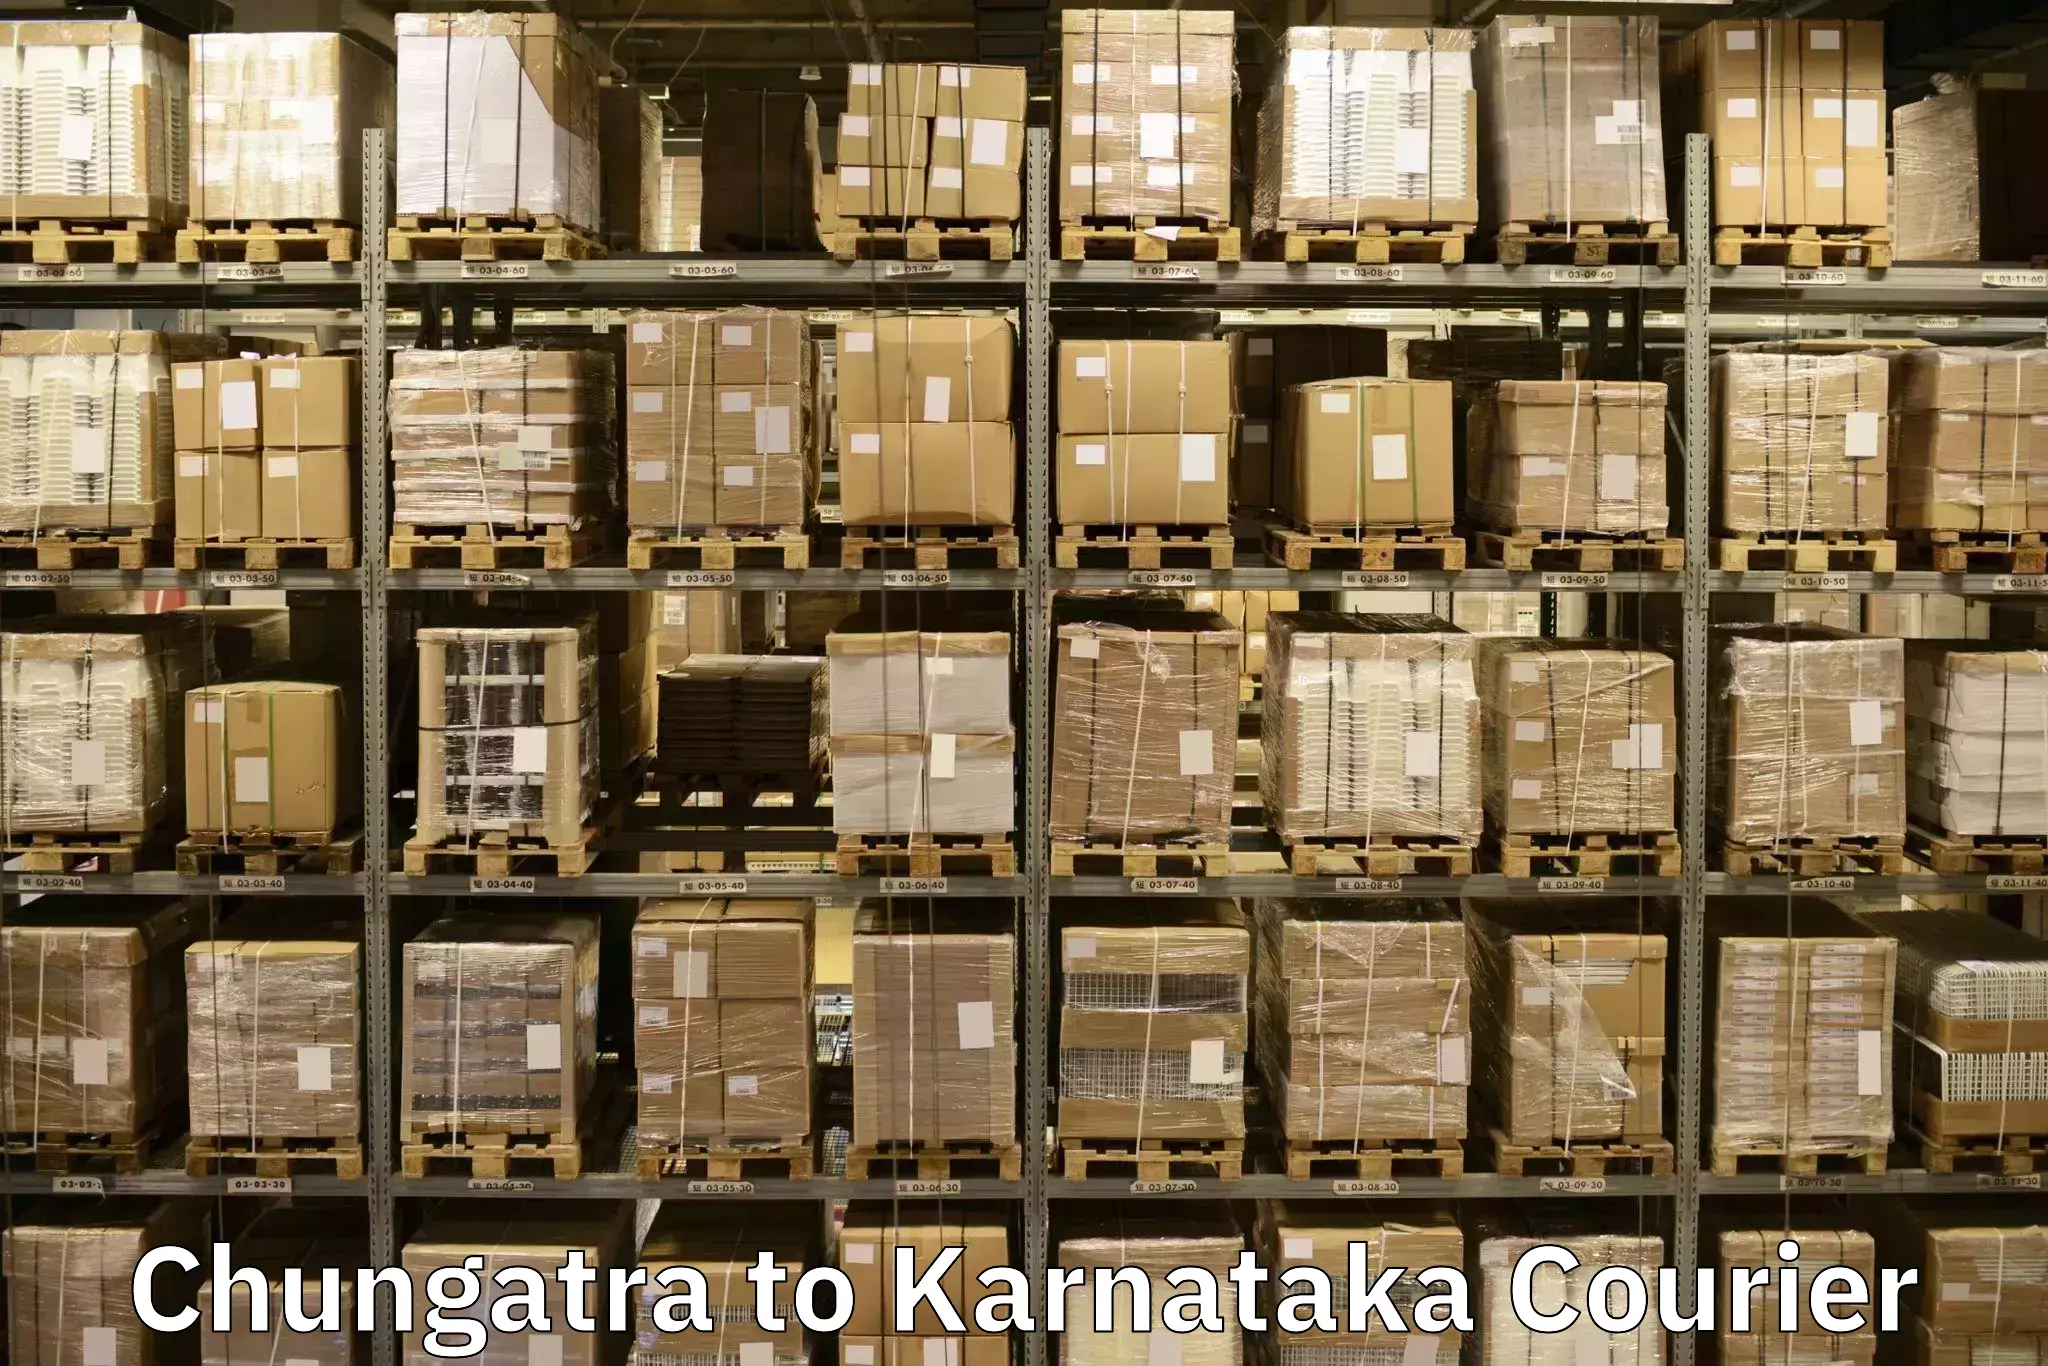 Moving and packing experts Chungatra to Madikeri